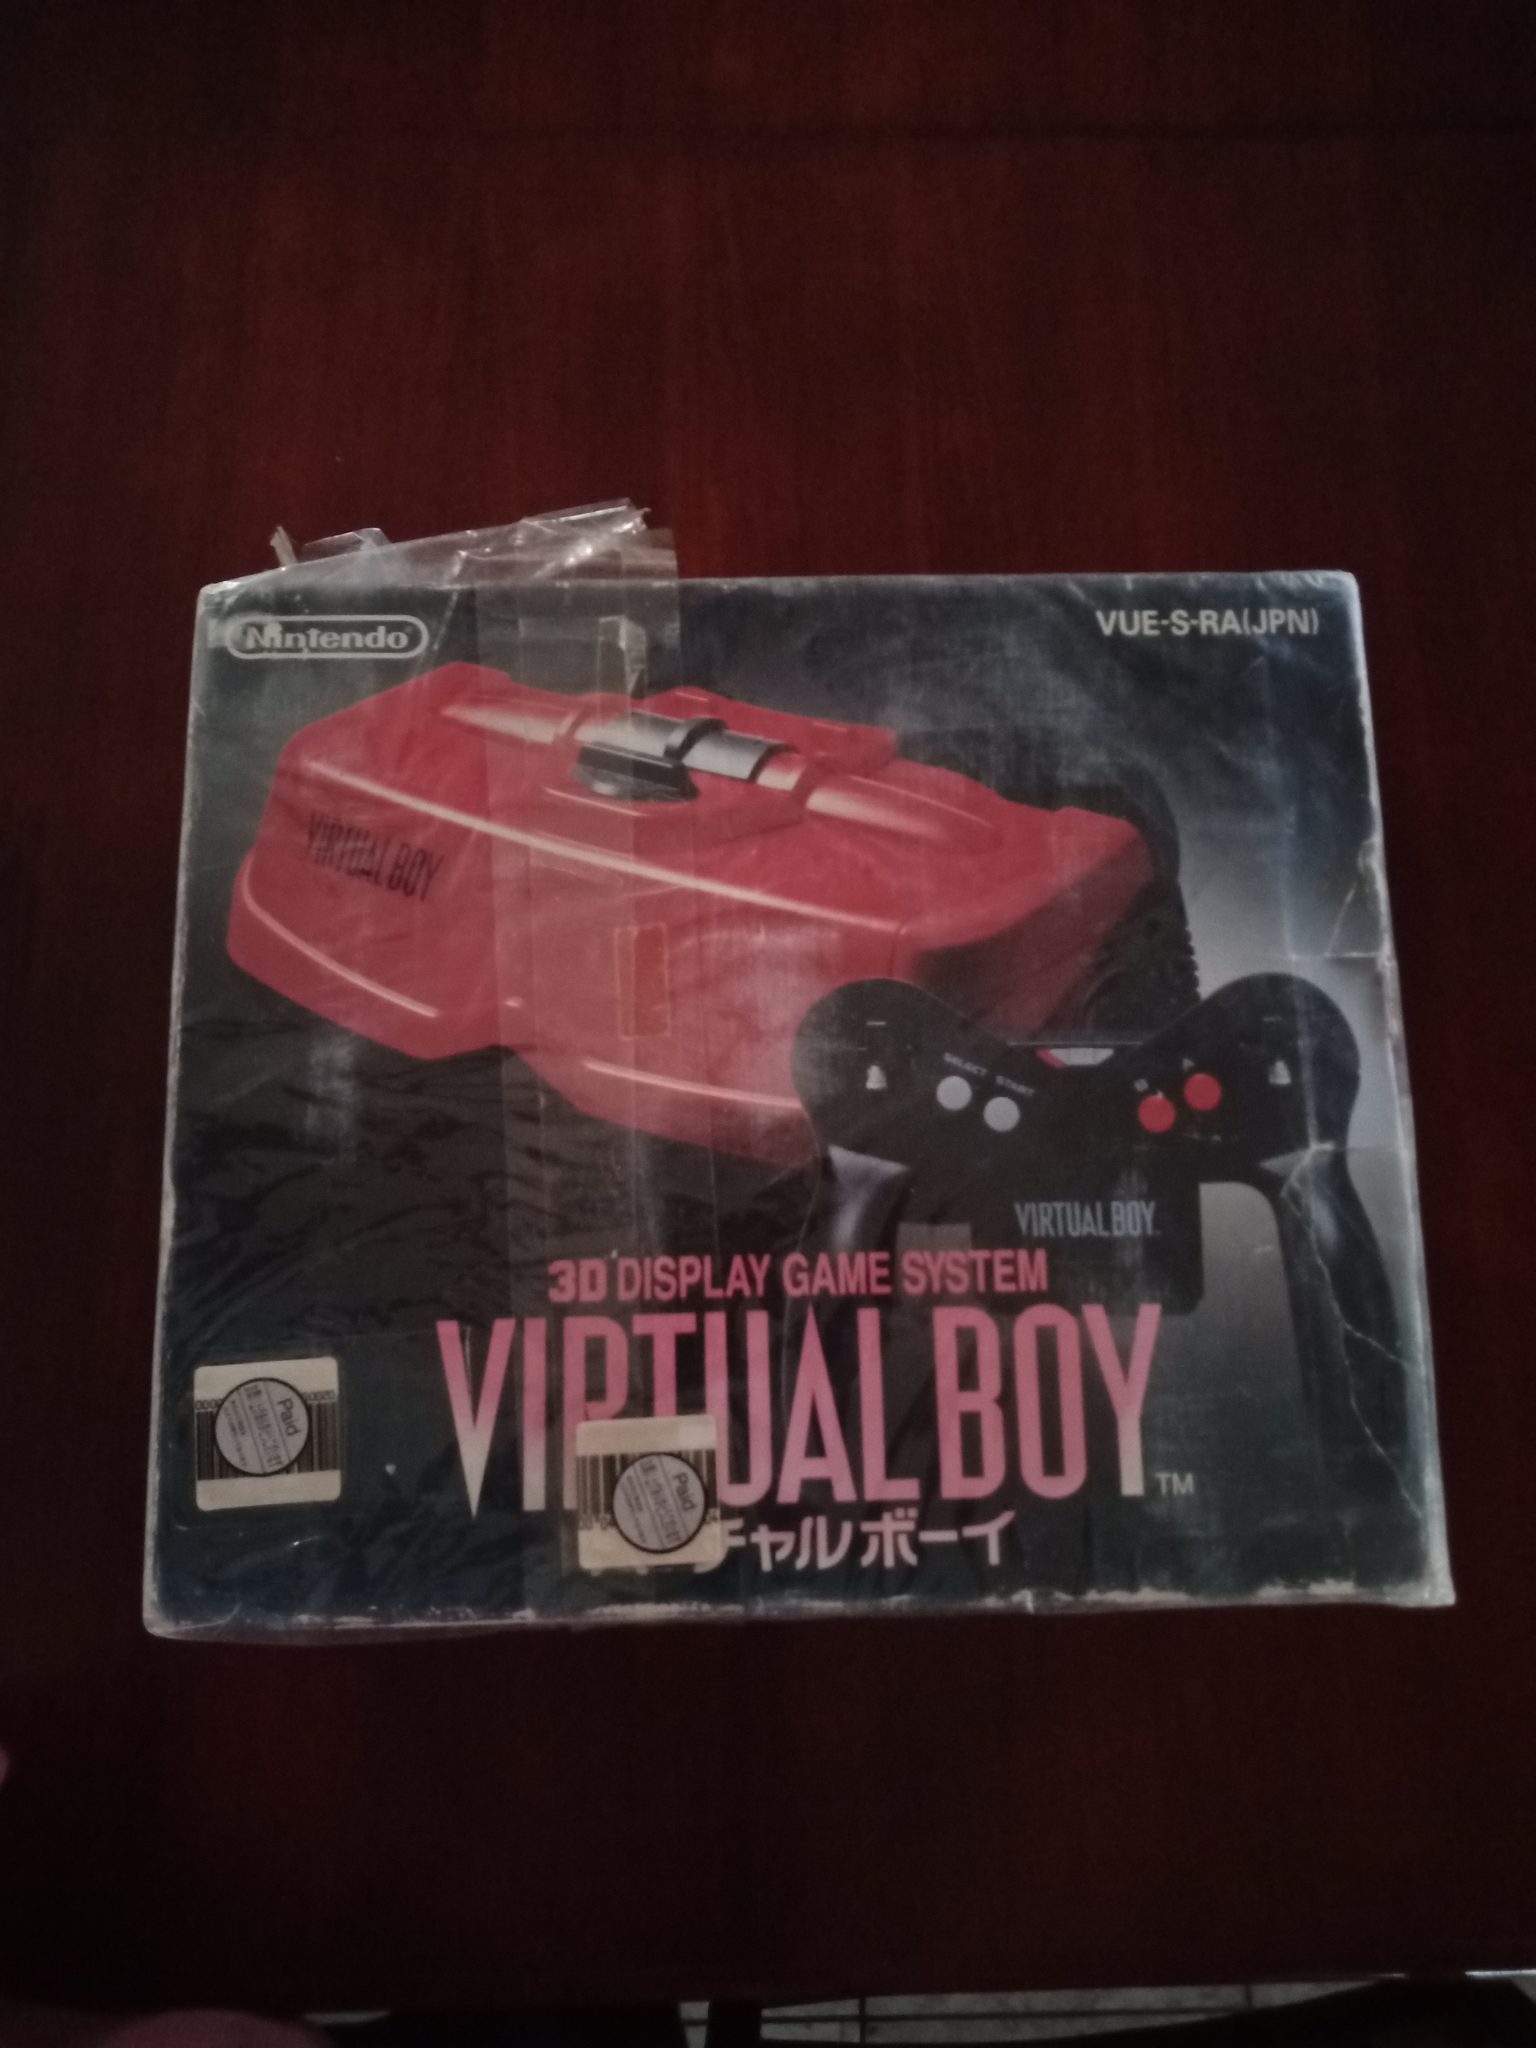 Nintendo Virtual Boy VUE-S-RA(JPN)